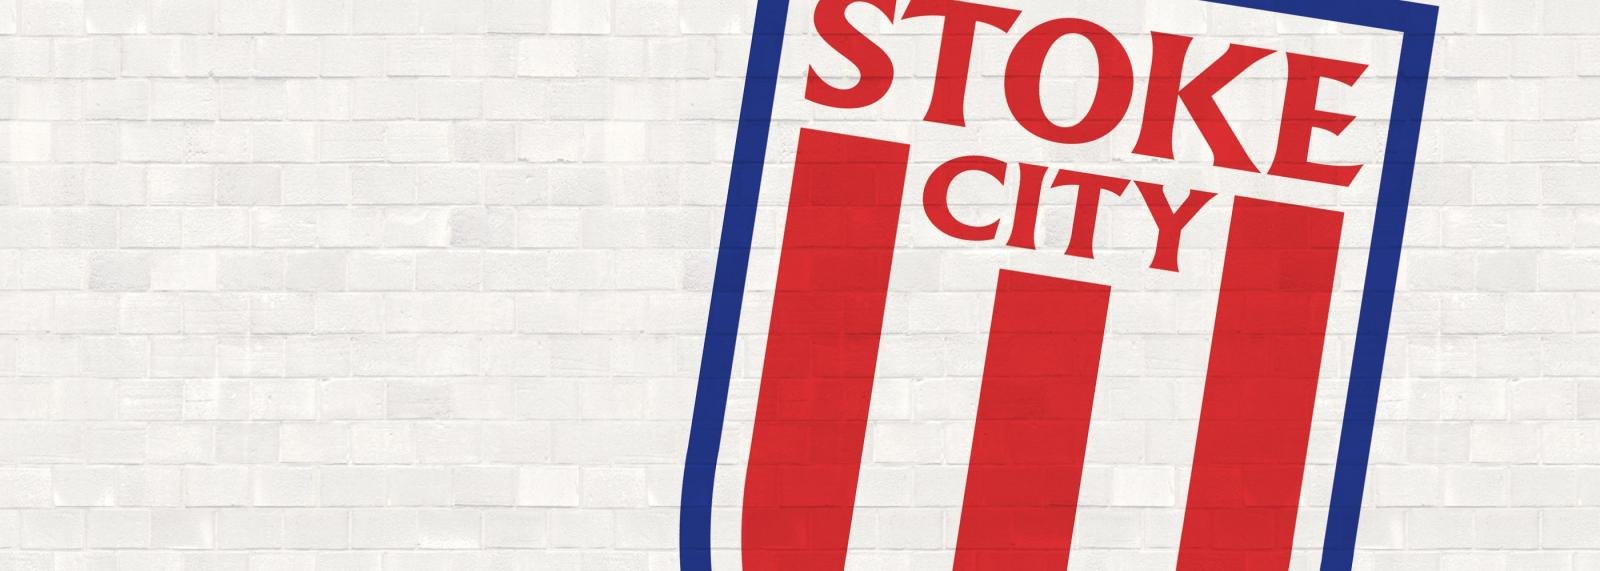 3 things we learnt from Stoke City’s 2015/16 Premier League season